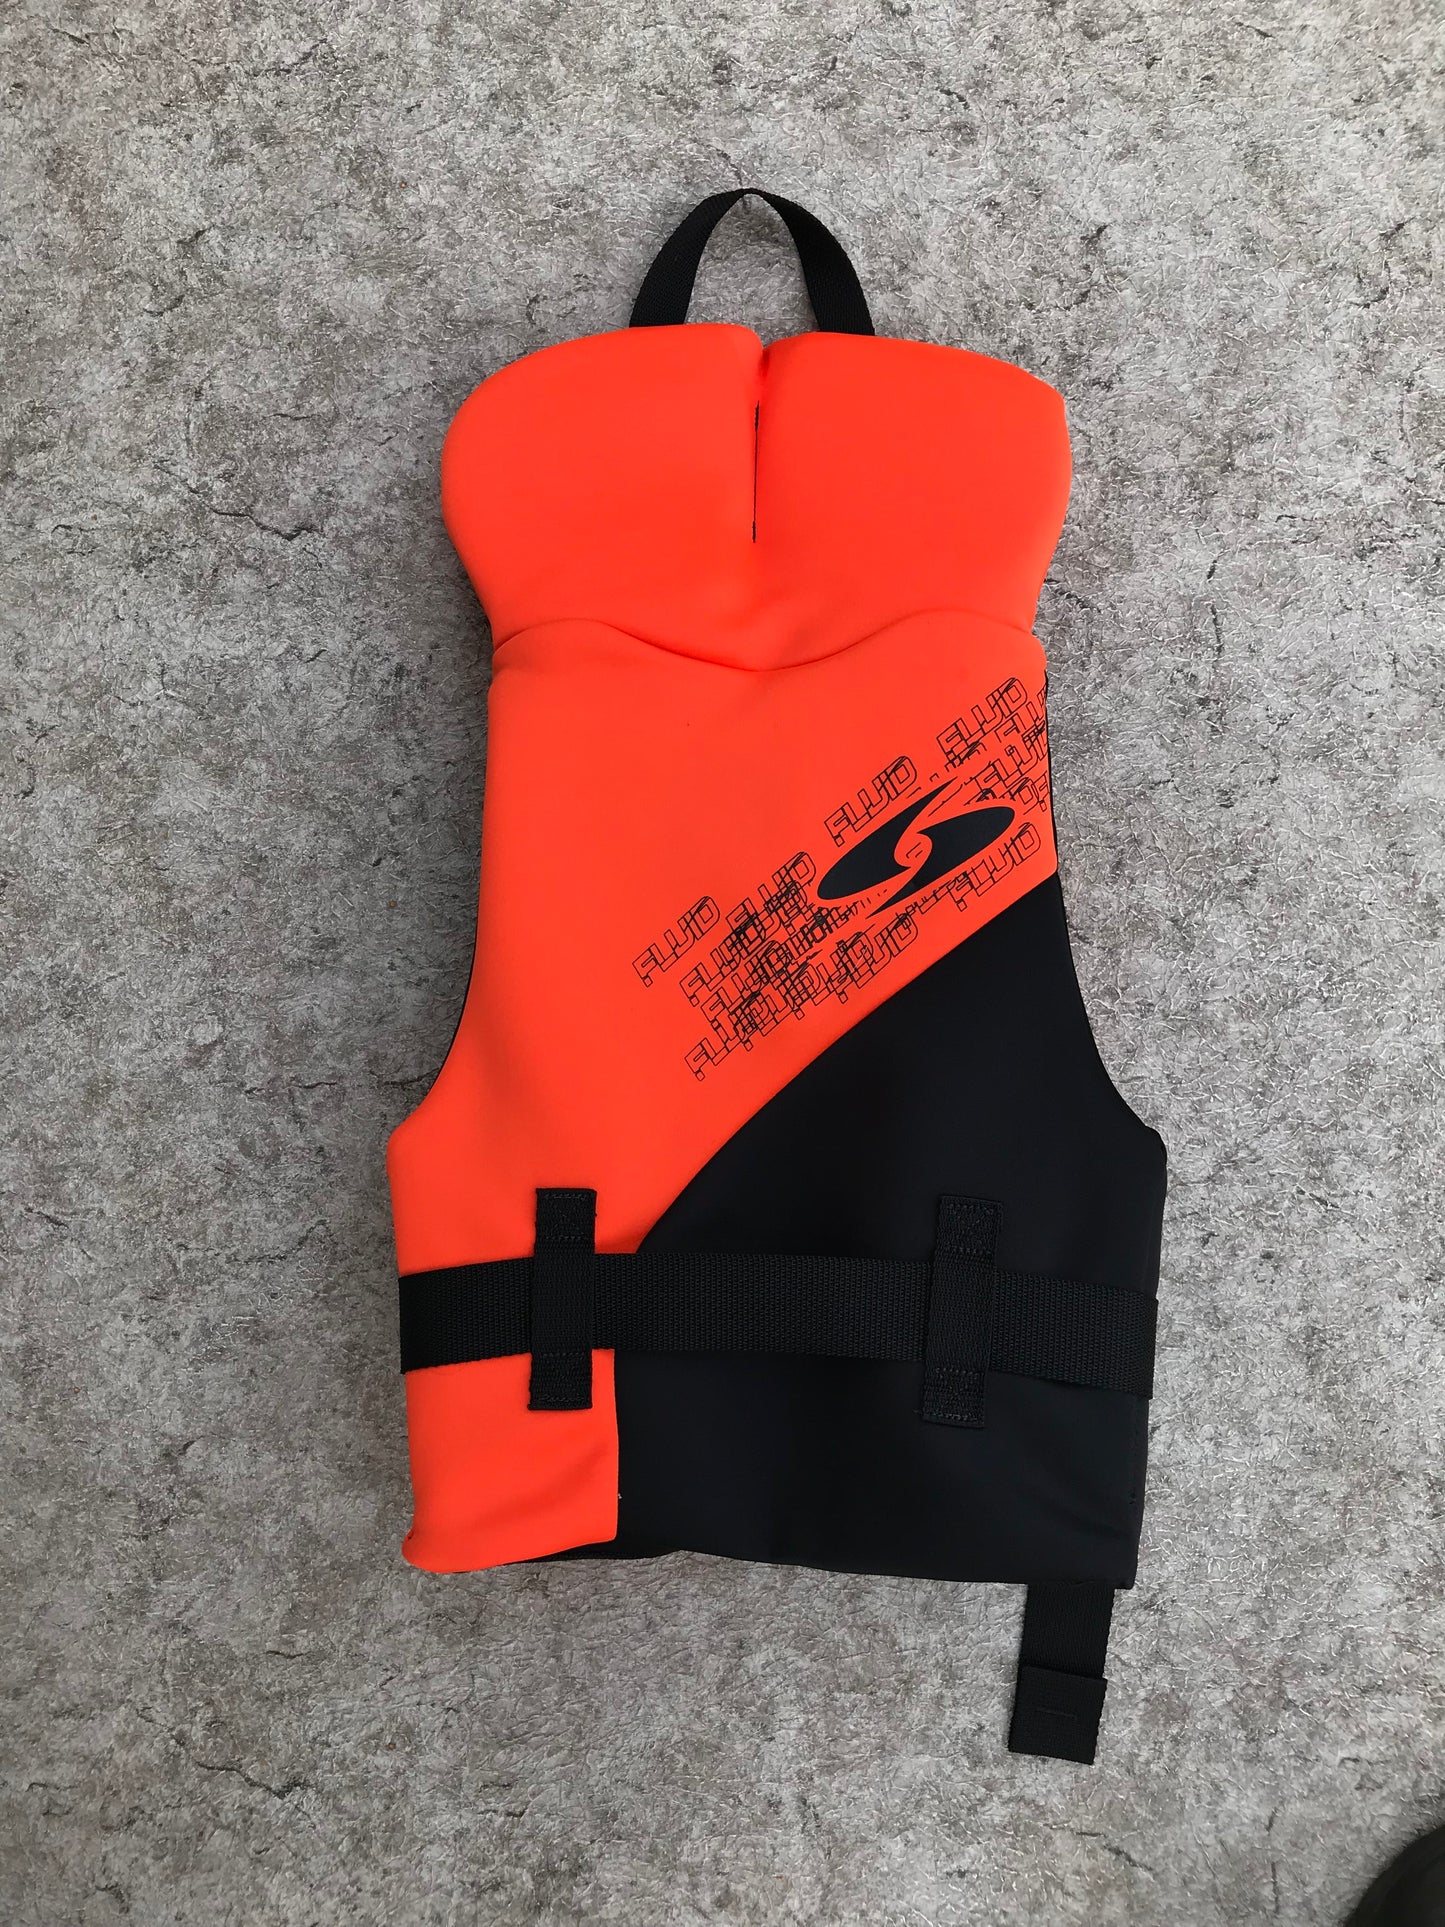 Life Jacket Child Size 60-90 Lb Youth Fluid Brilliant Orange Black Neoprene New Demo Model